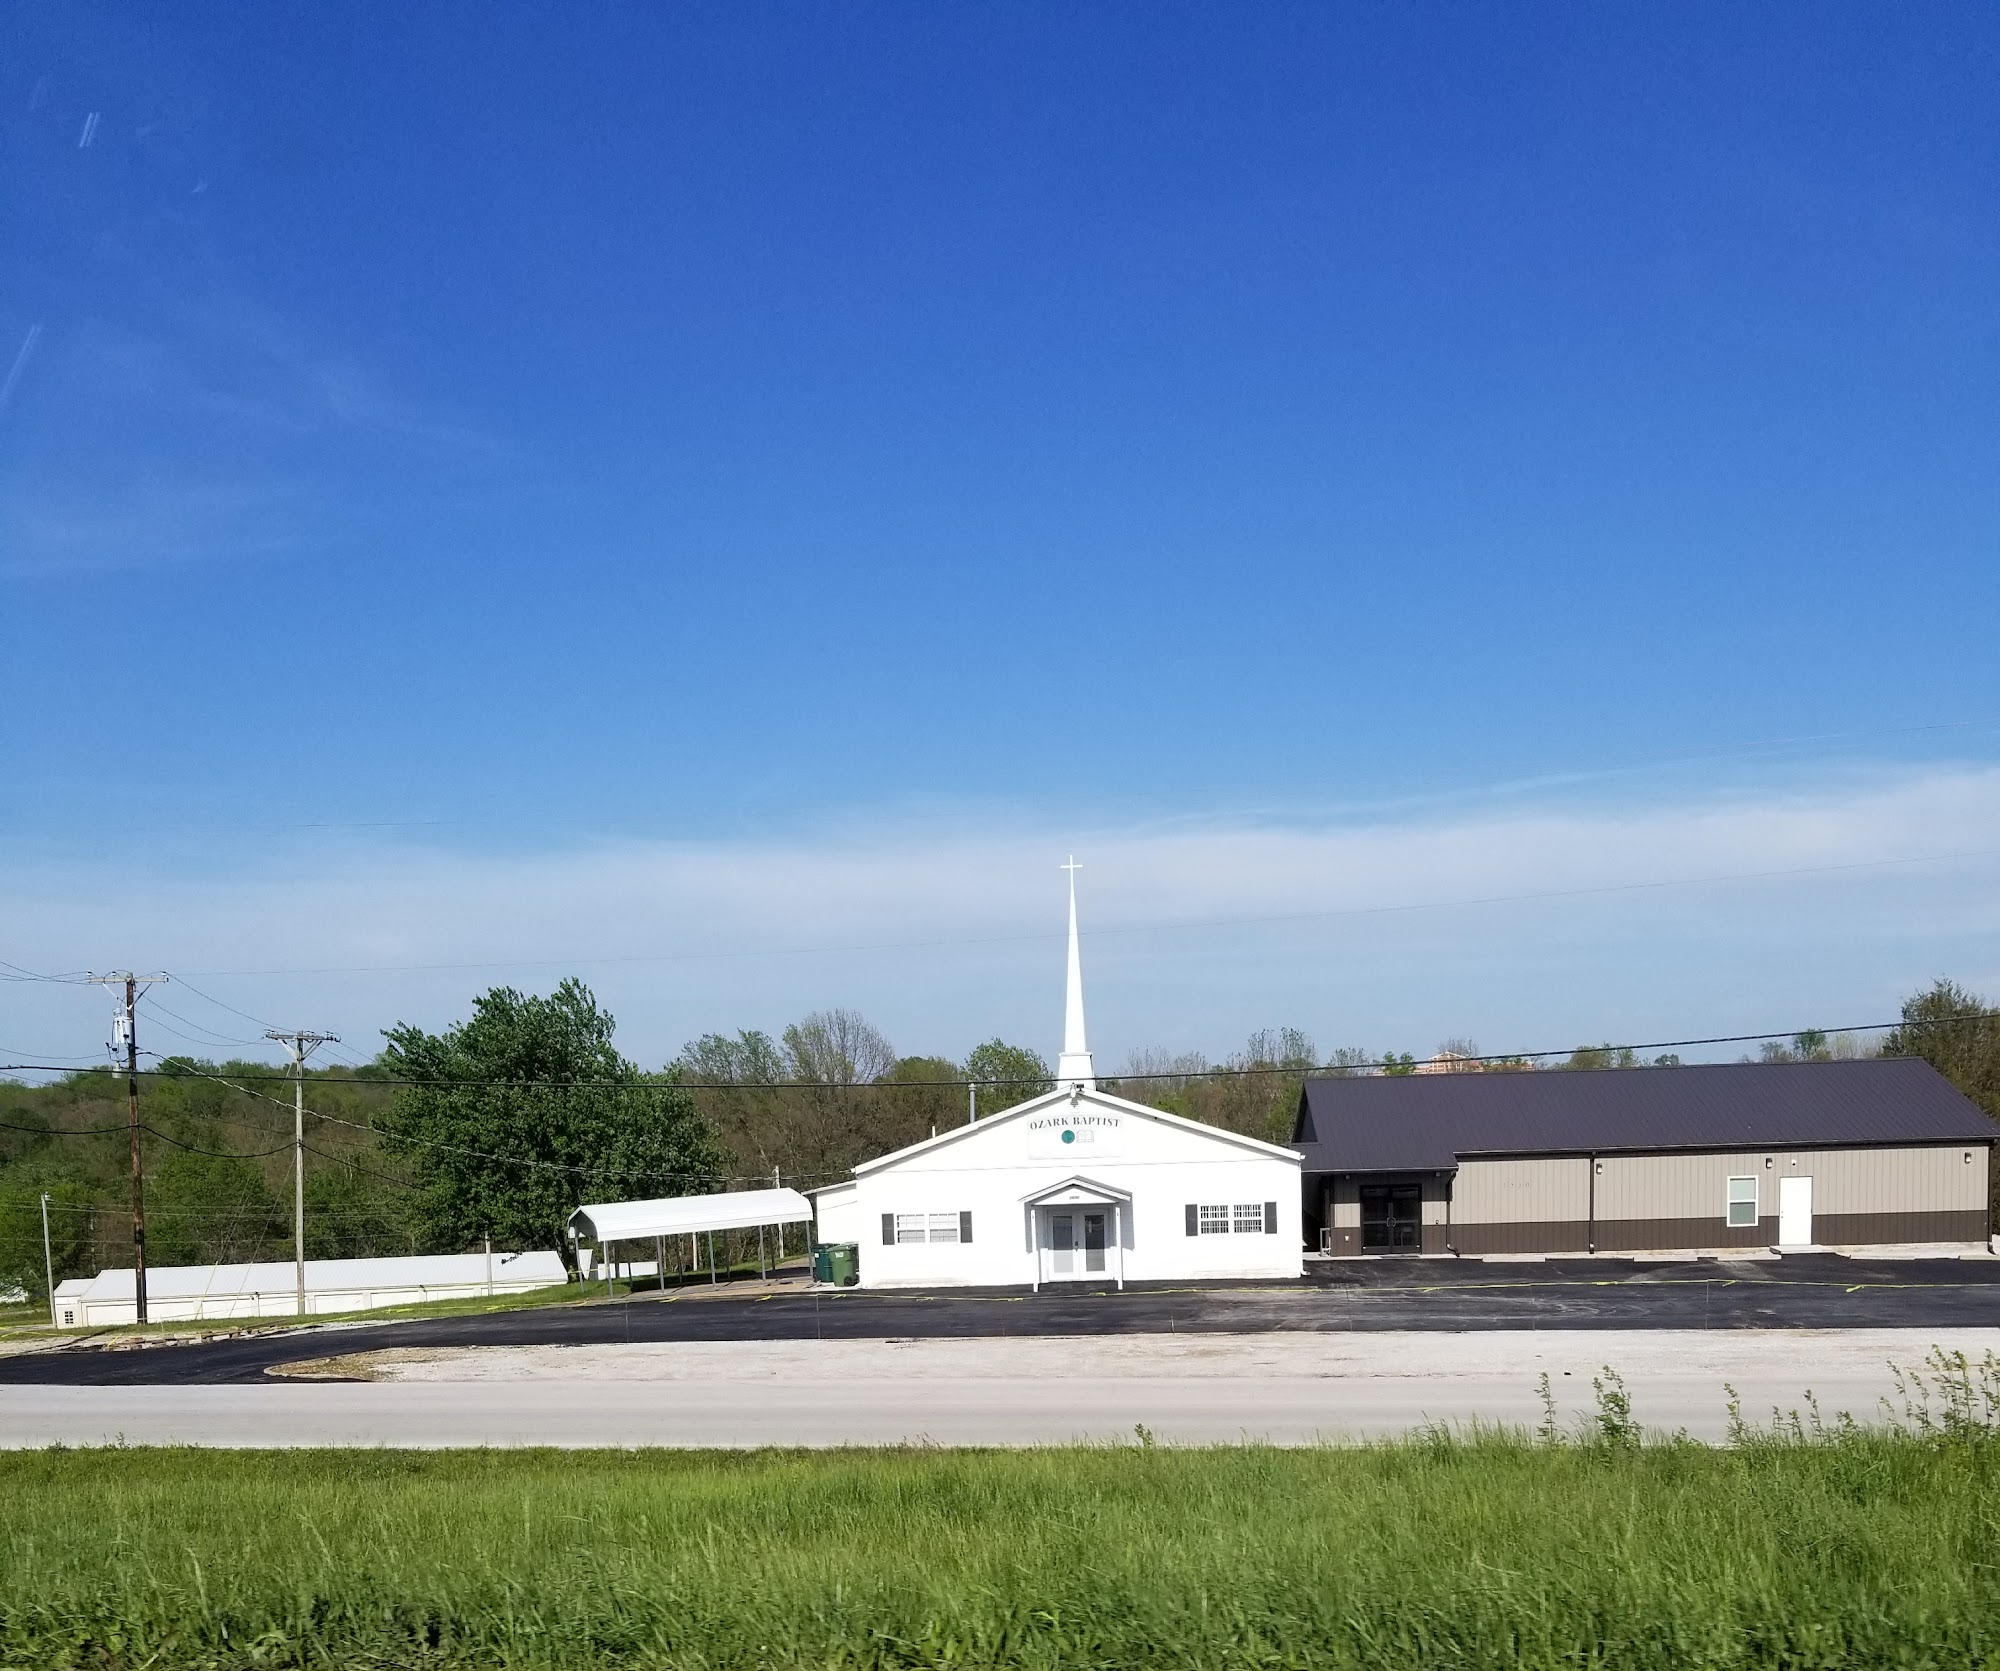 Ozark Baptist Church